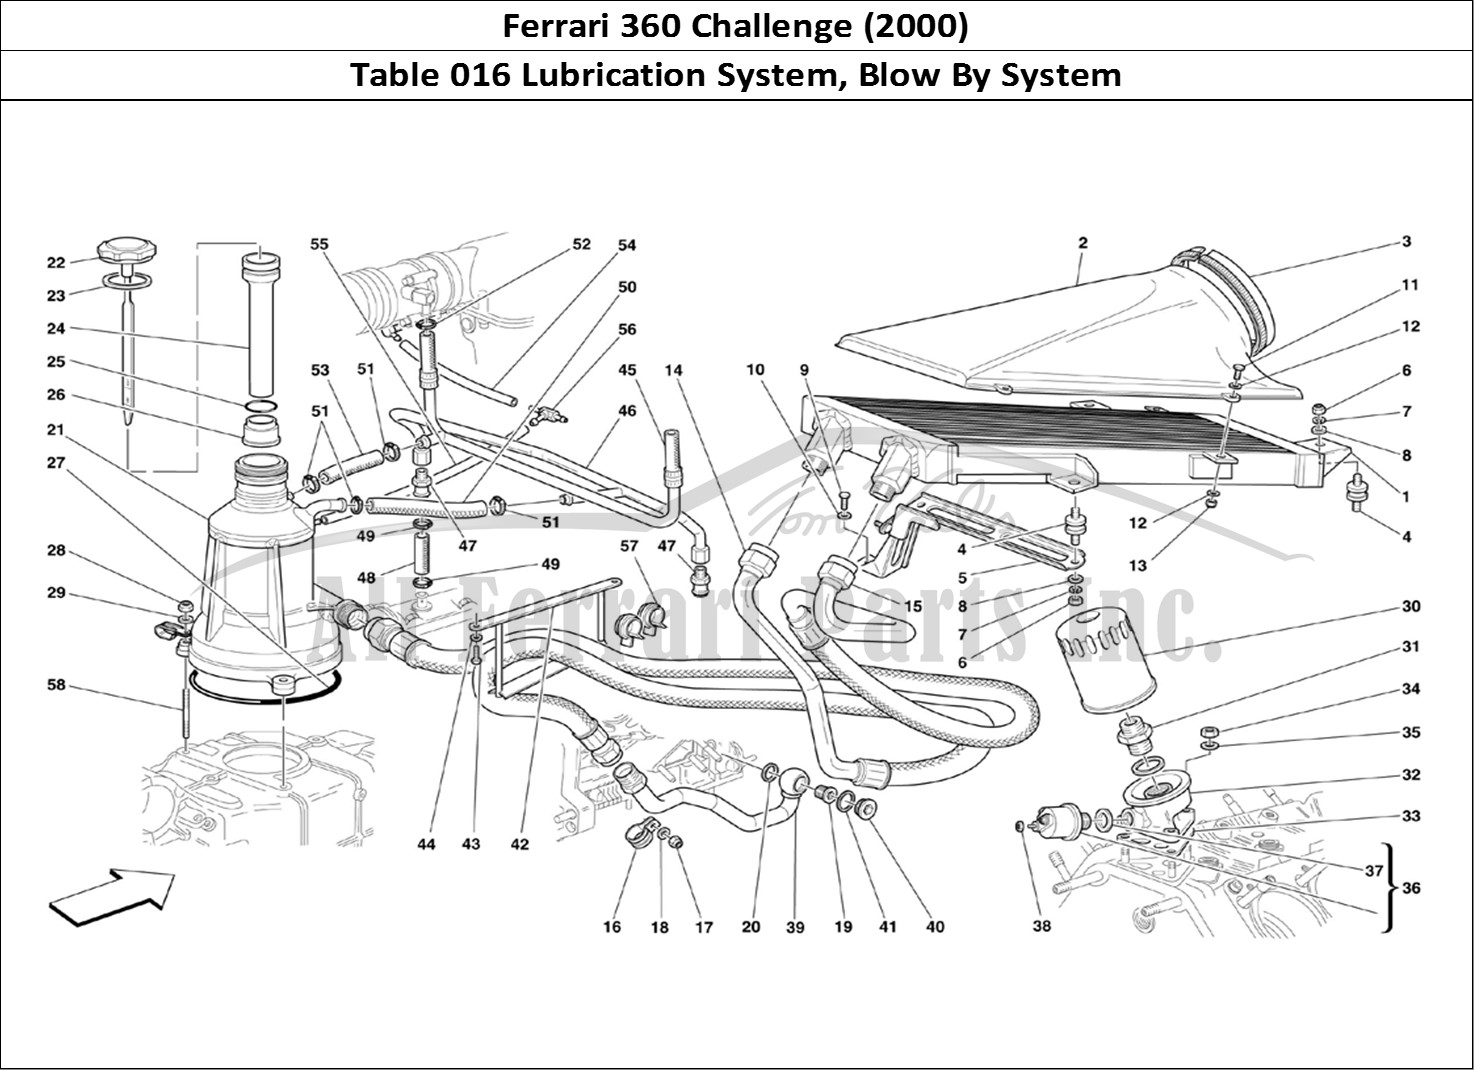 Ferrari Parts Ferrari 360 Challenge (2000) Page 016 Lubrication System and Bl